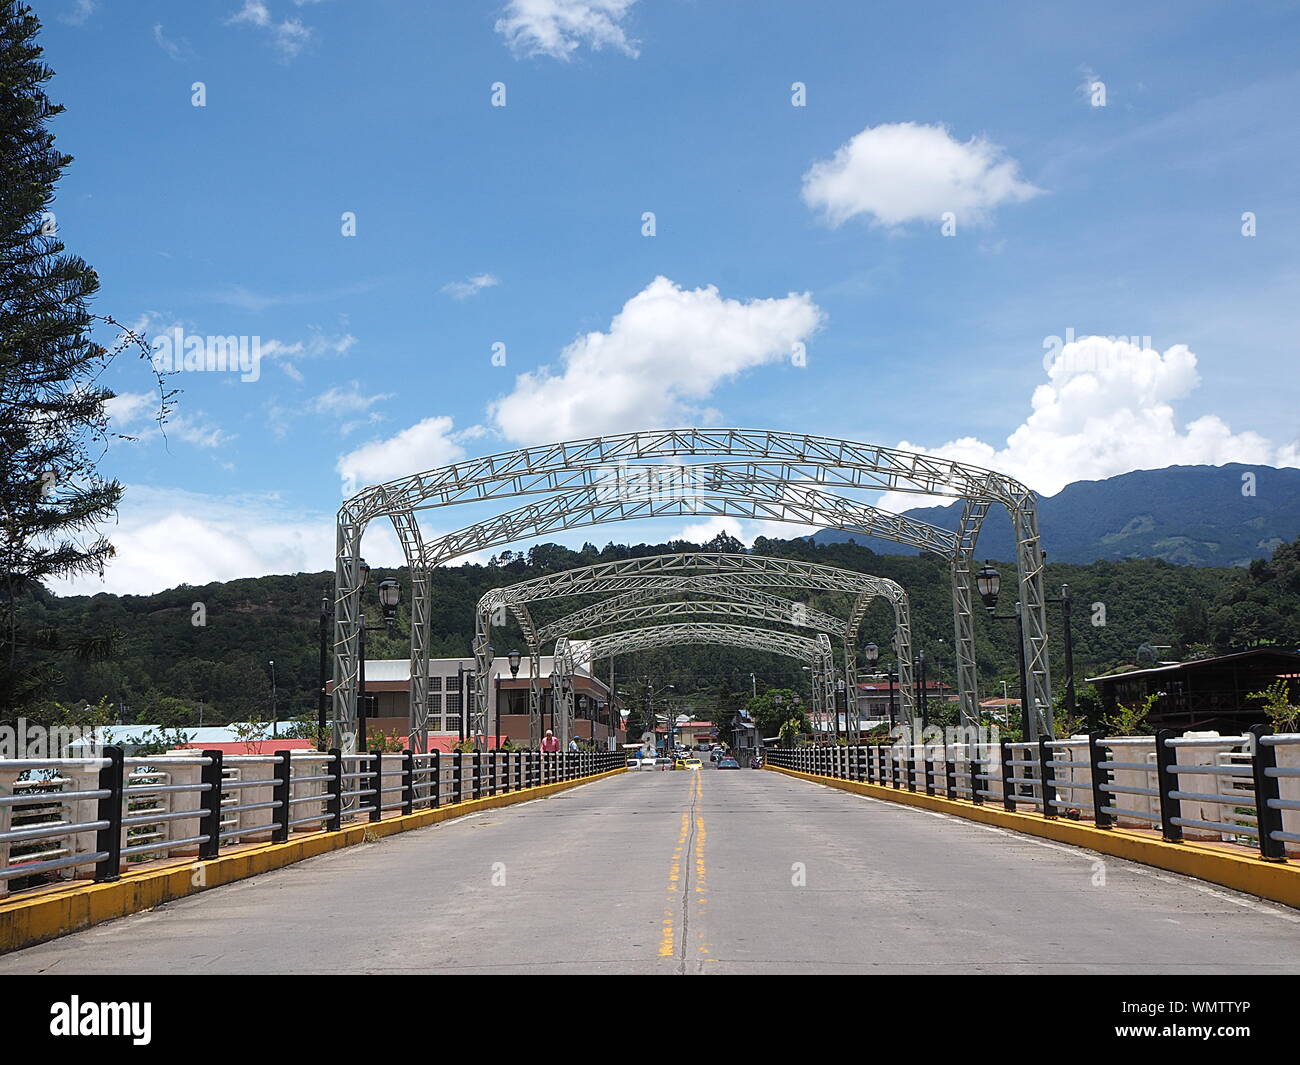 Steel arch suspension road and pedestrian bridge over the Caldera River in Boquete, Panama Highlands Stock Photo